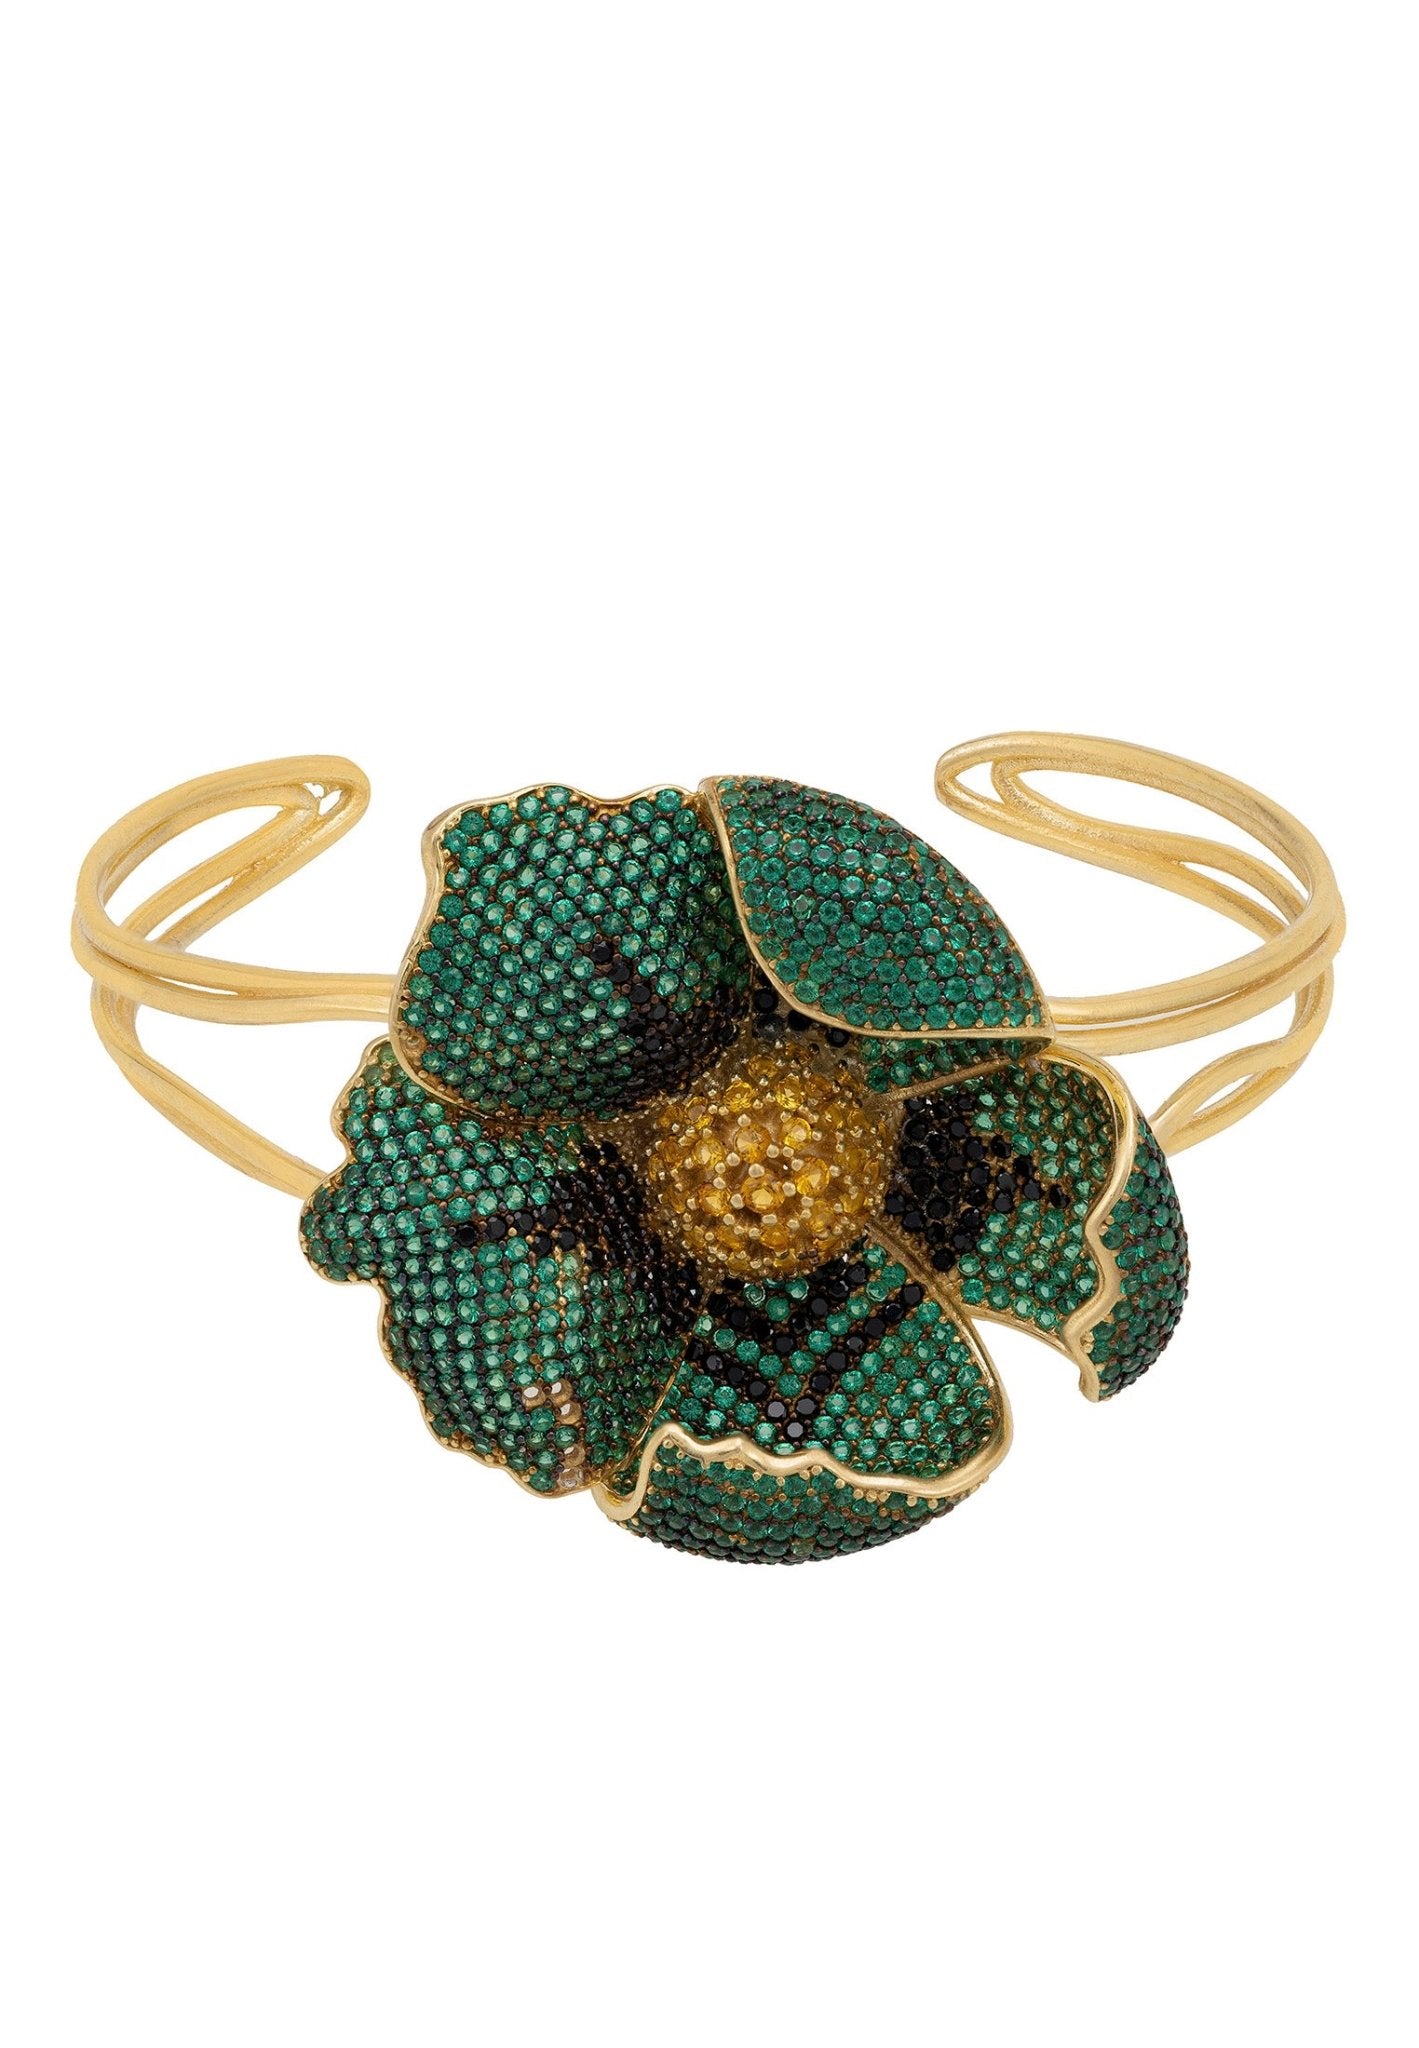 Poppy Bangle Cuff Bracelet Gold Emerald Green Cz - LATELITA Bracelets